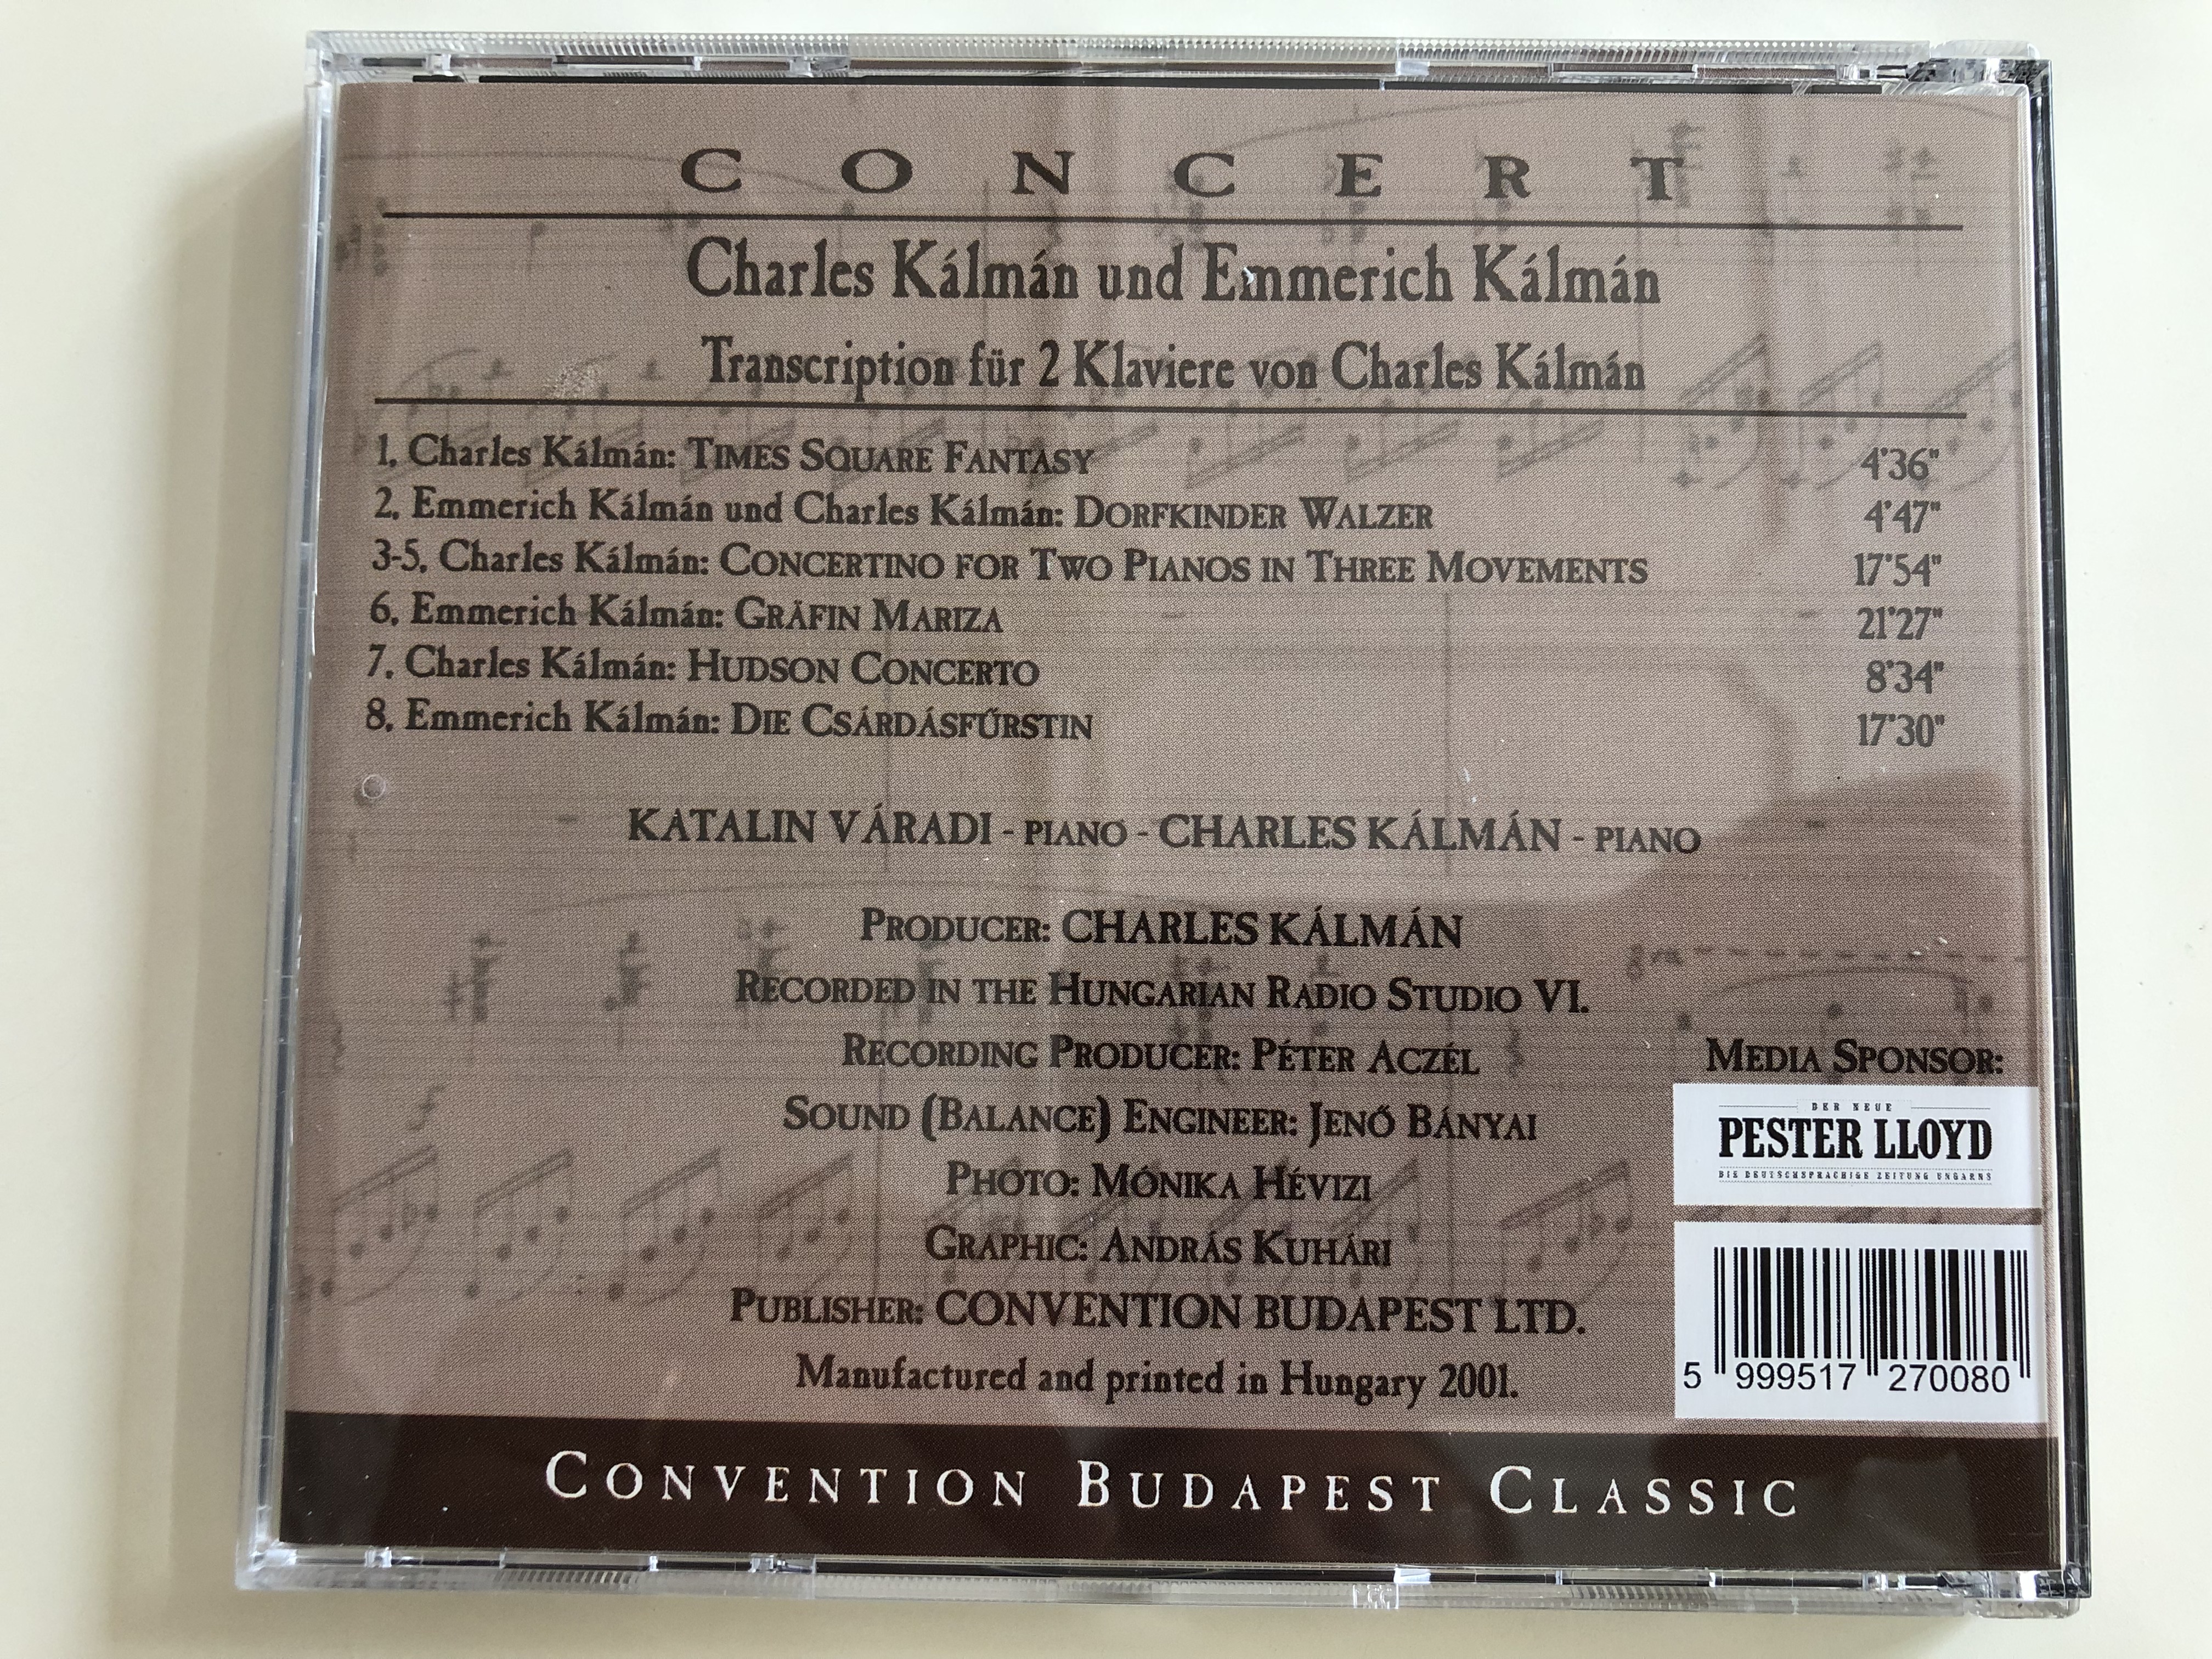 concert-charles-kalman-und-emmerich-kalman-transcription-fur-2-klaviere-von-charles-kalman-first-performance-for-two-pianos-el-sz-r-ket-zongorara-convention-budapest-classic-audio-cd-cbp-9-.jpg